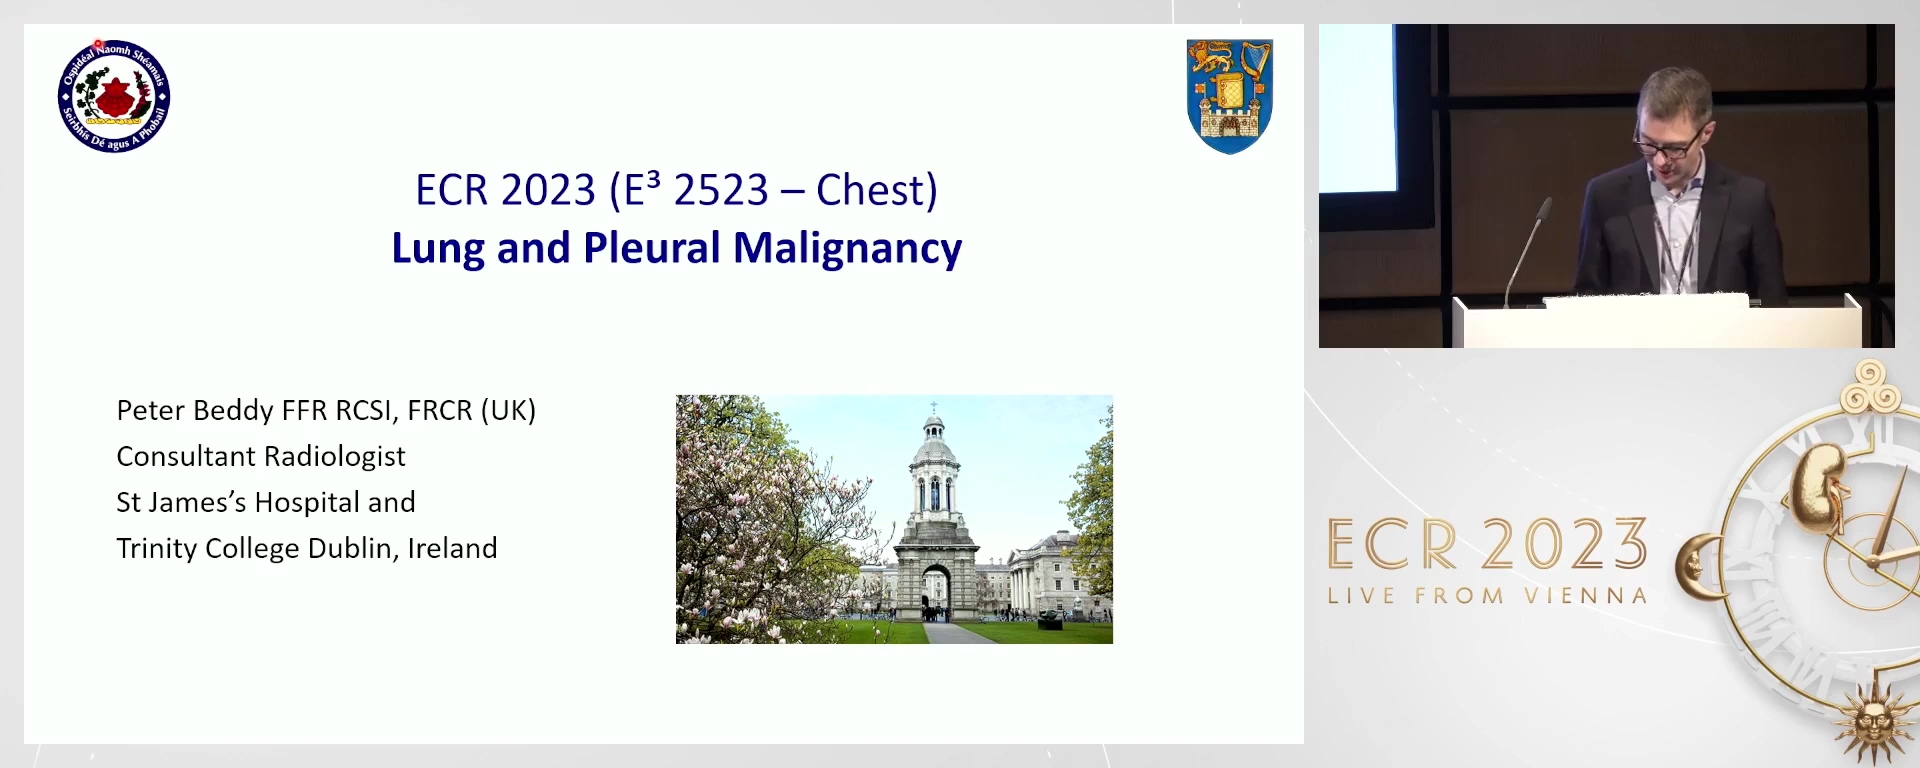 C. Lung and pleural malignancy